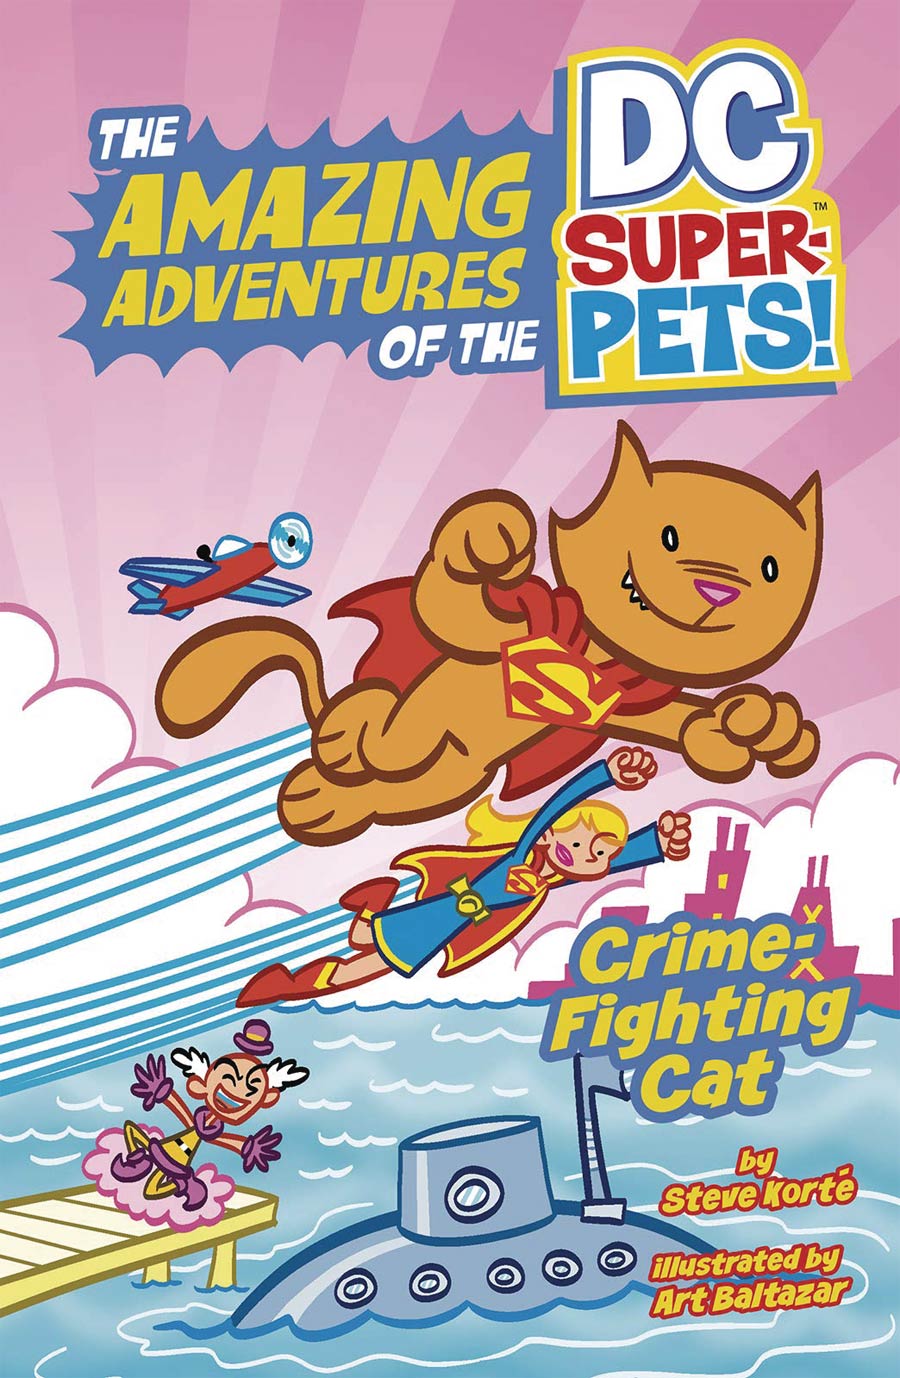 Amazing Adventures Of The DC Super-Pets Crime-Fighting Cat TP